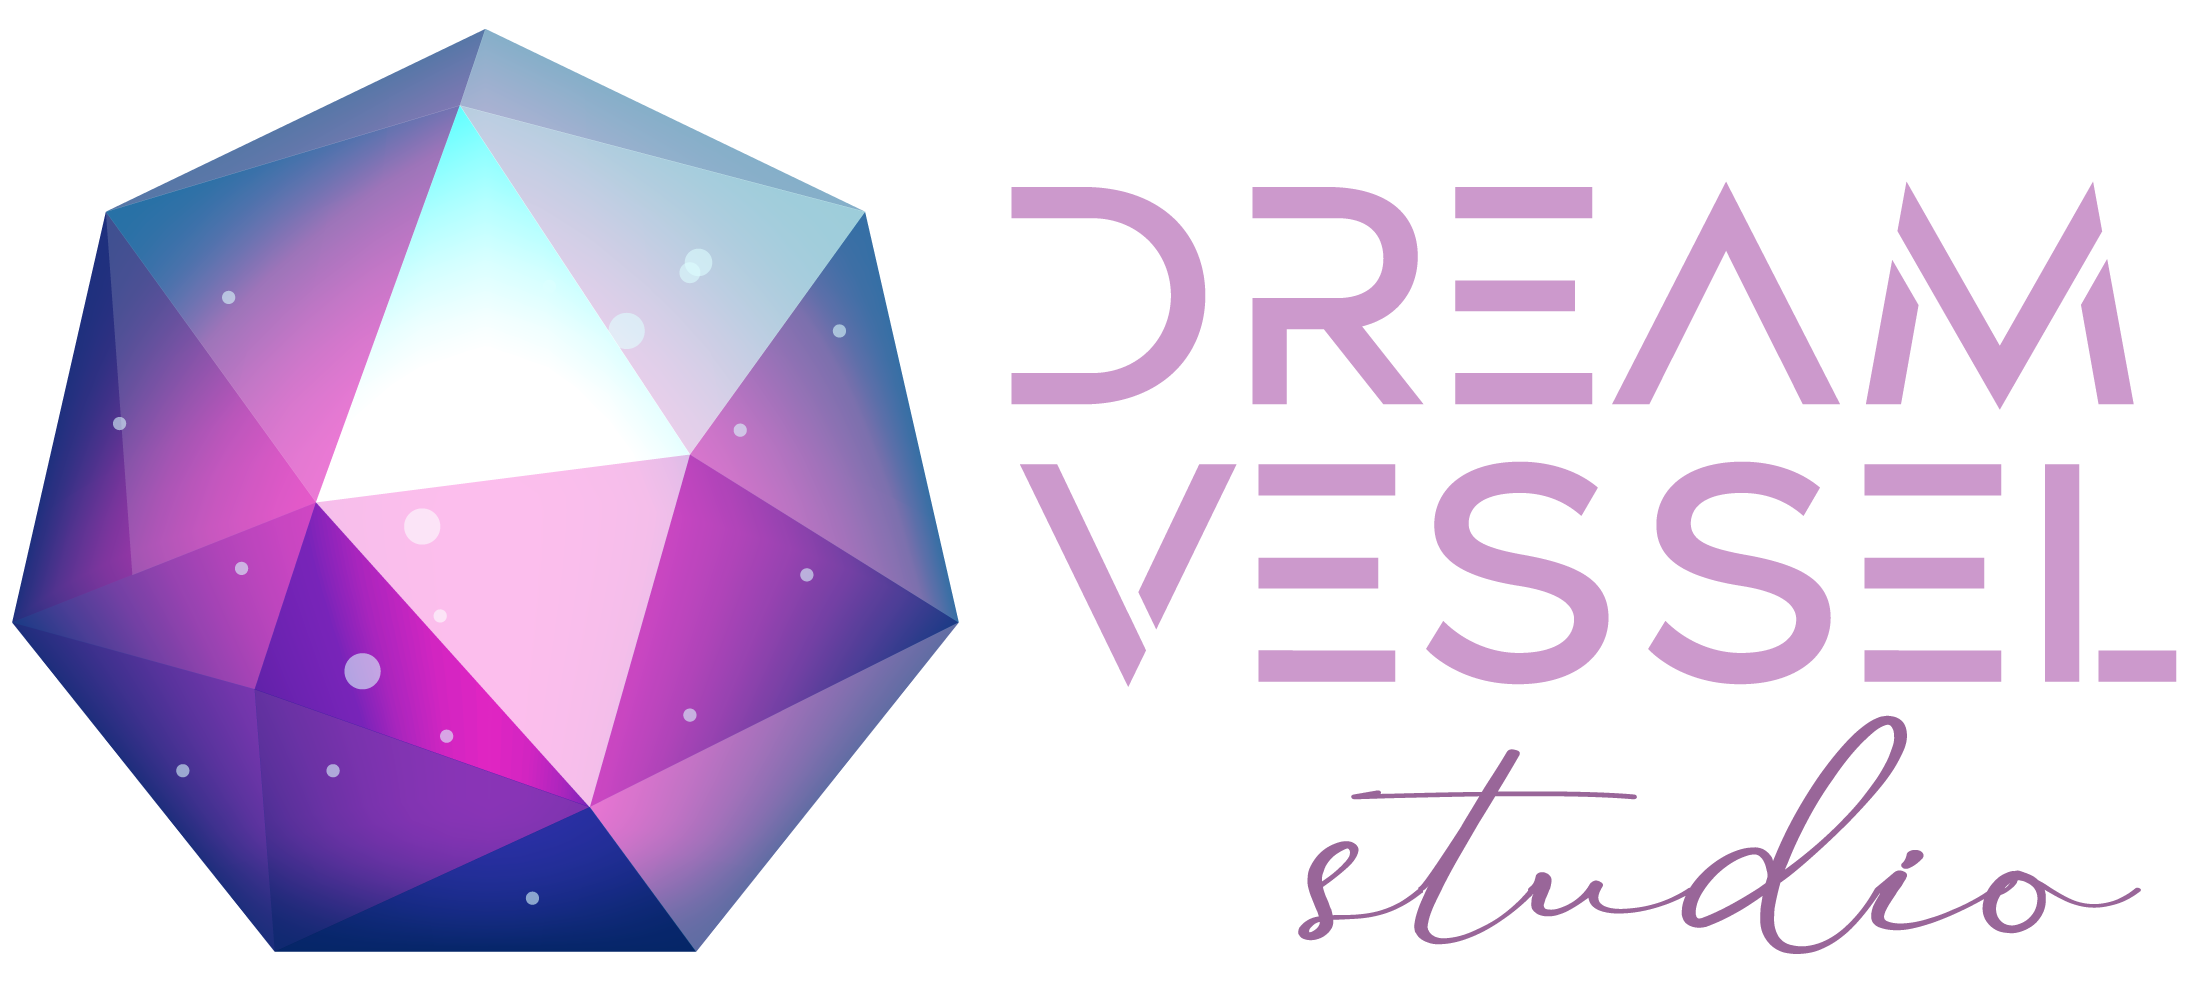 dream-vessel-logo+name2200x1000-pinksky